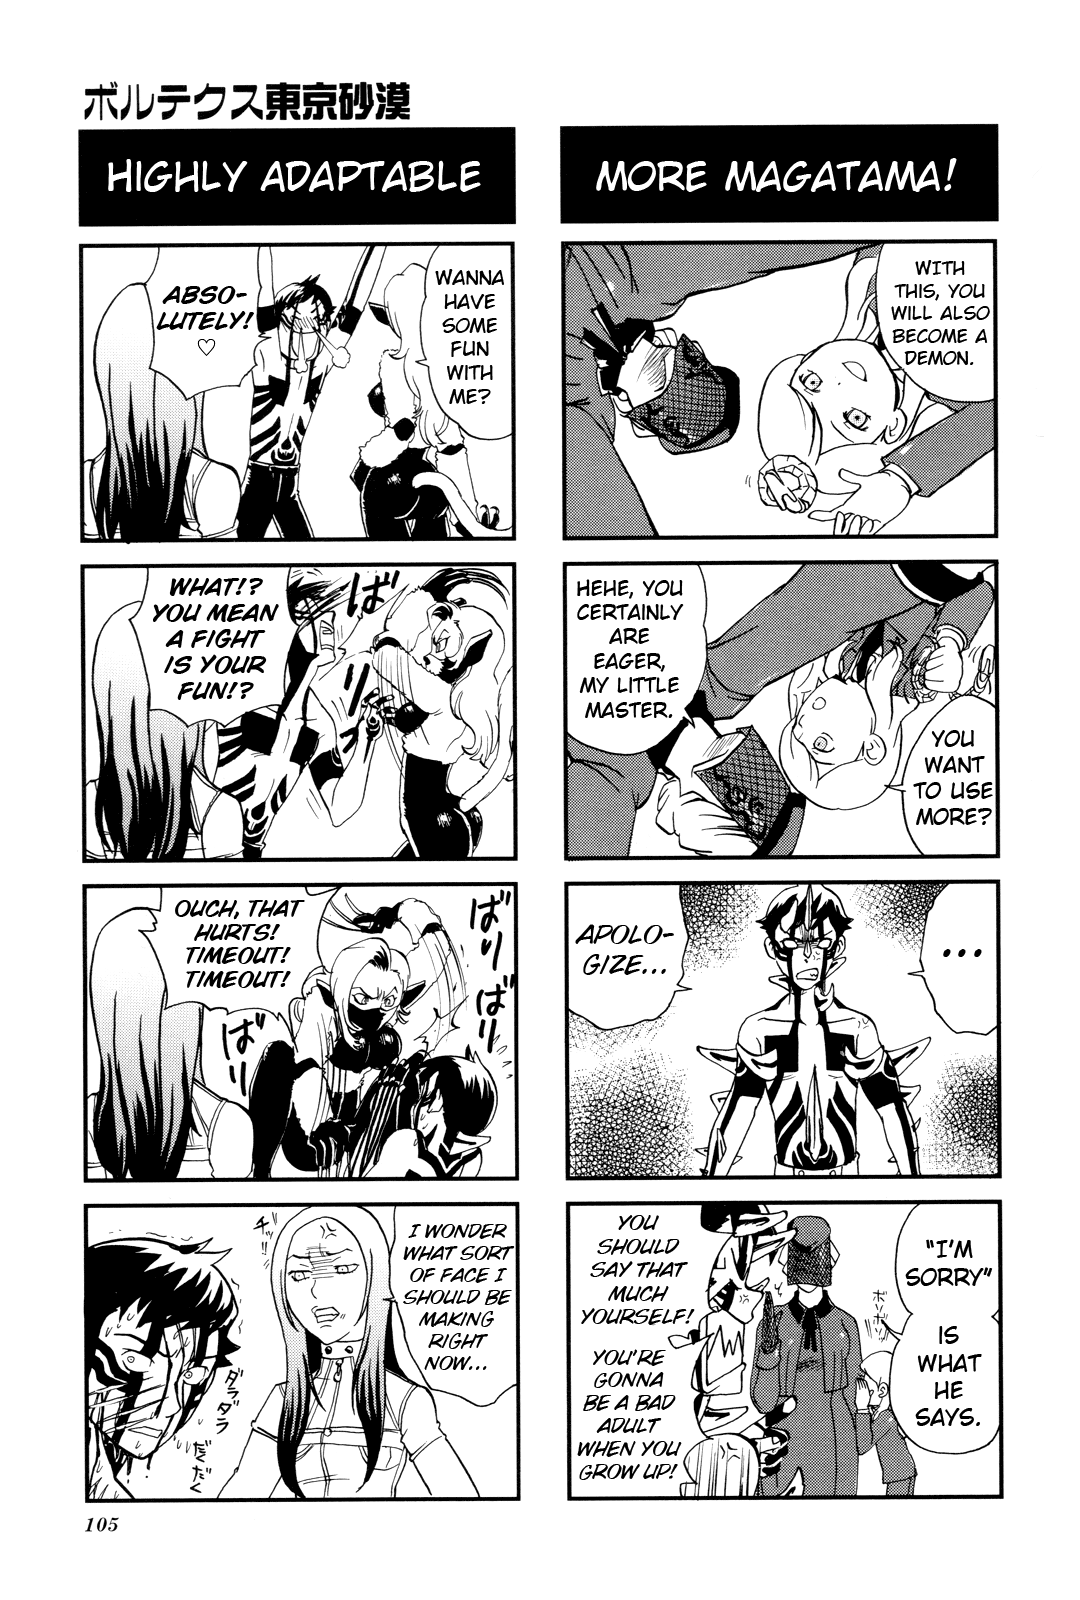 Shin Megami Tensei Iii - Nocturne 4-Koma Gag Battle - Page 2